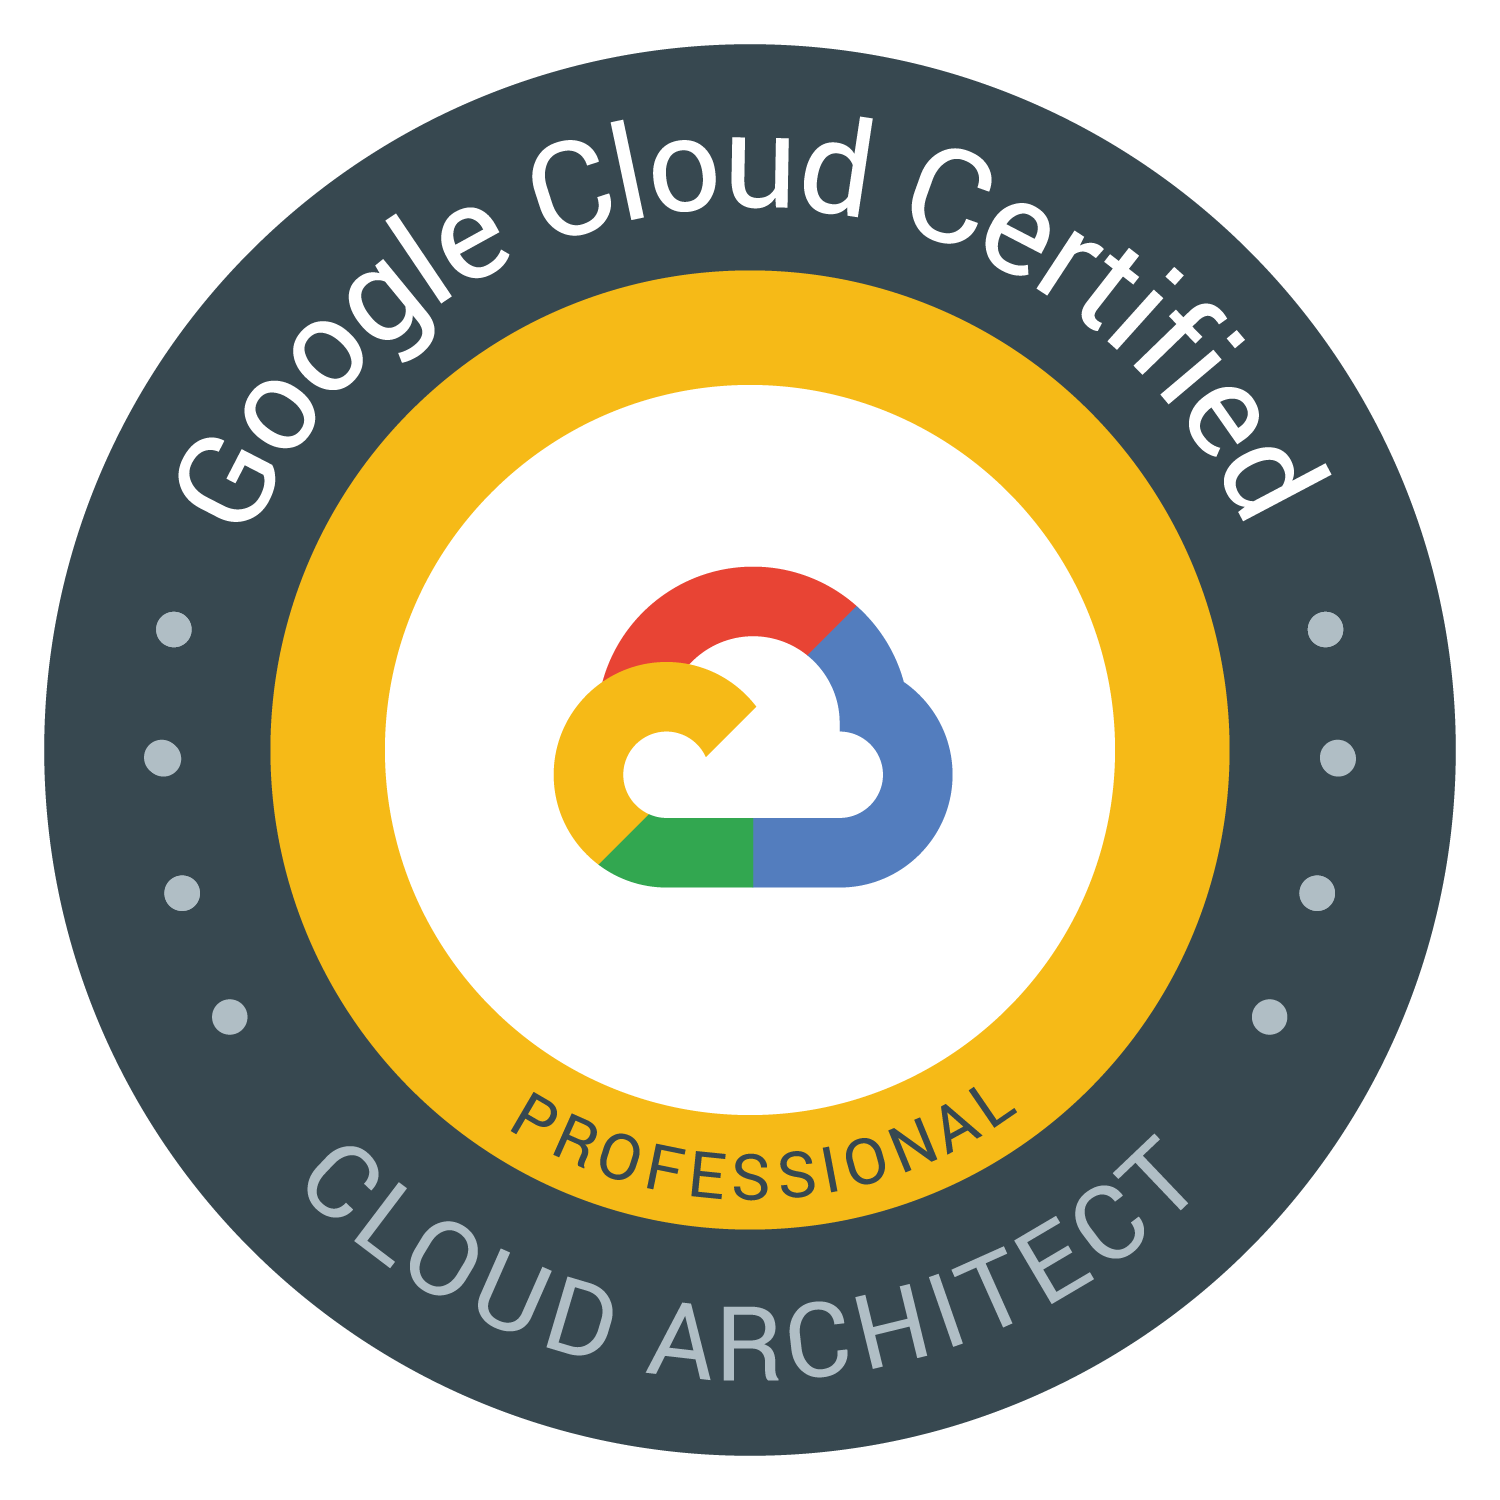 Google Cloud Certified – Professional Cloud Architect